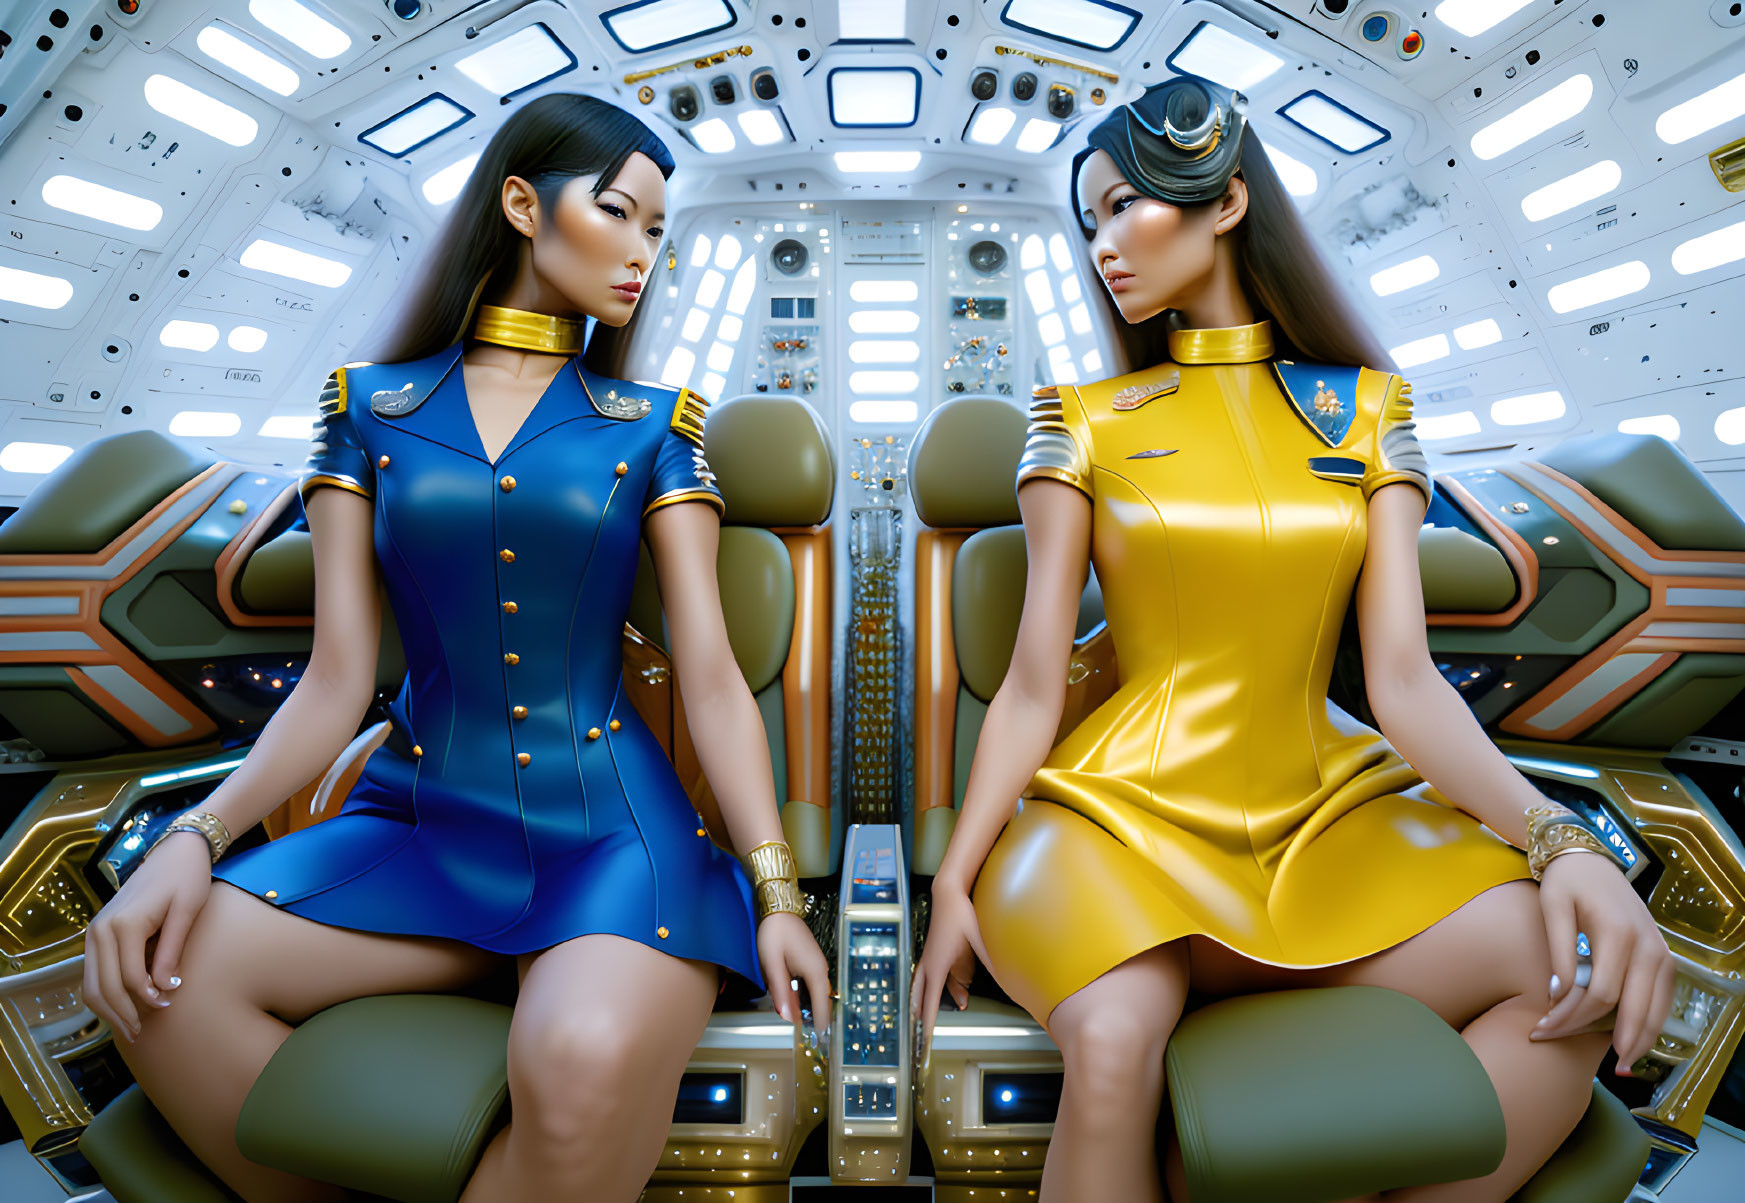 Futuristic women in spacecraft with high-tech dashboard